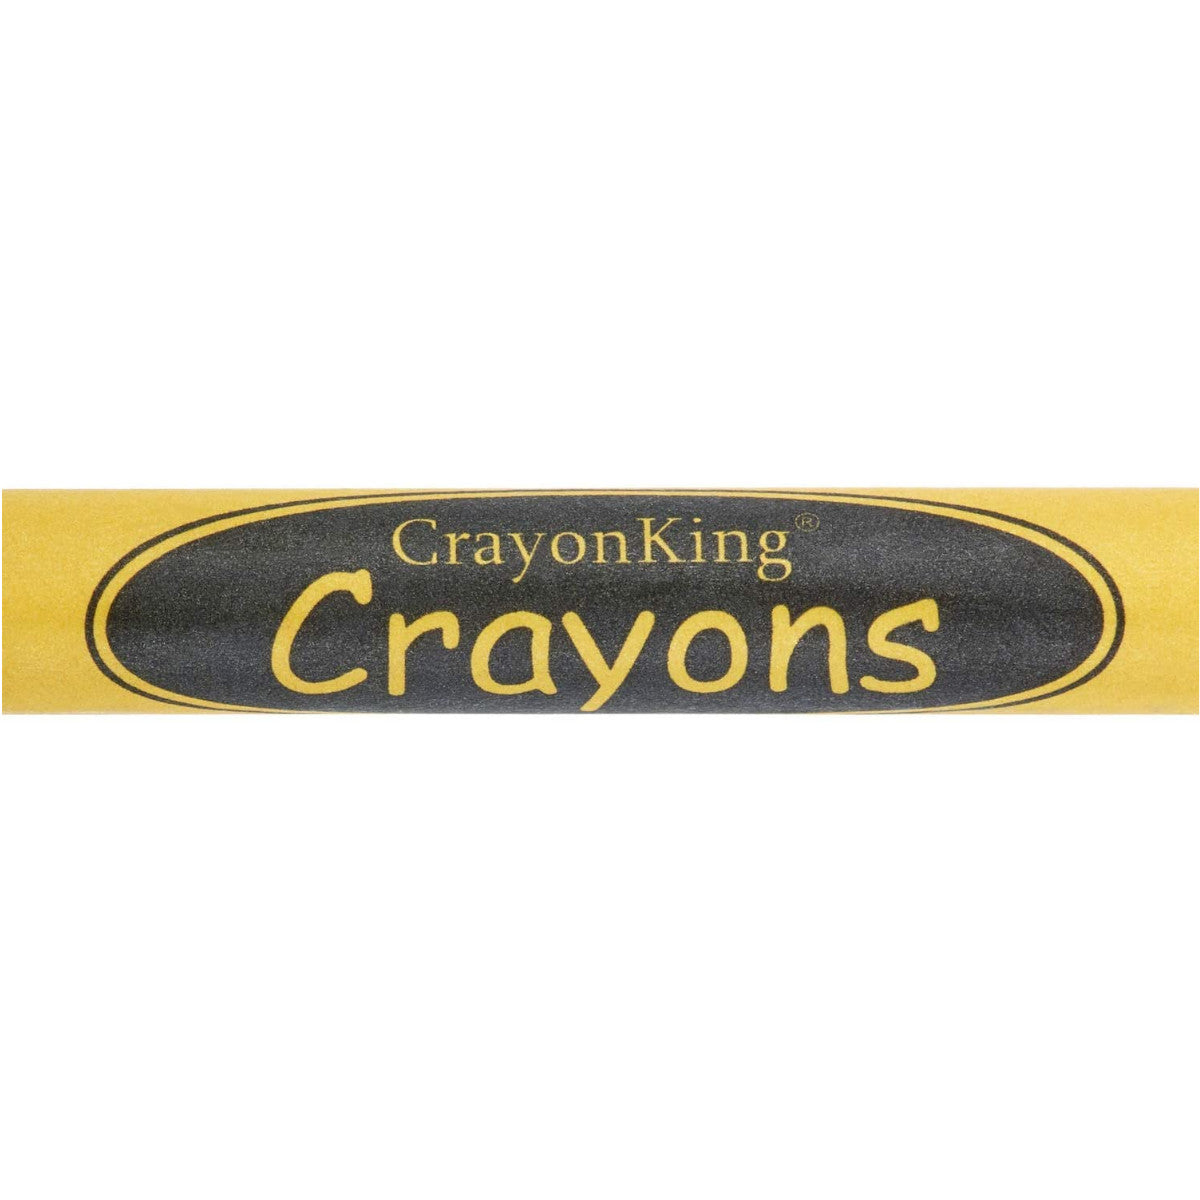 Photo showing CrayonKing logo and word Crayons